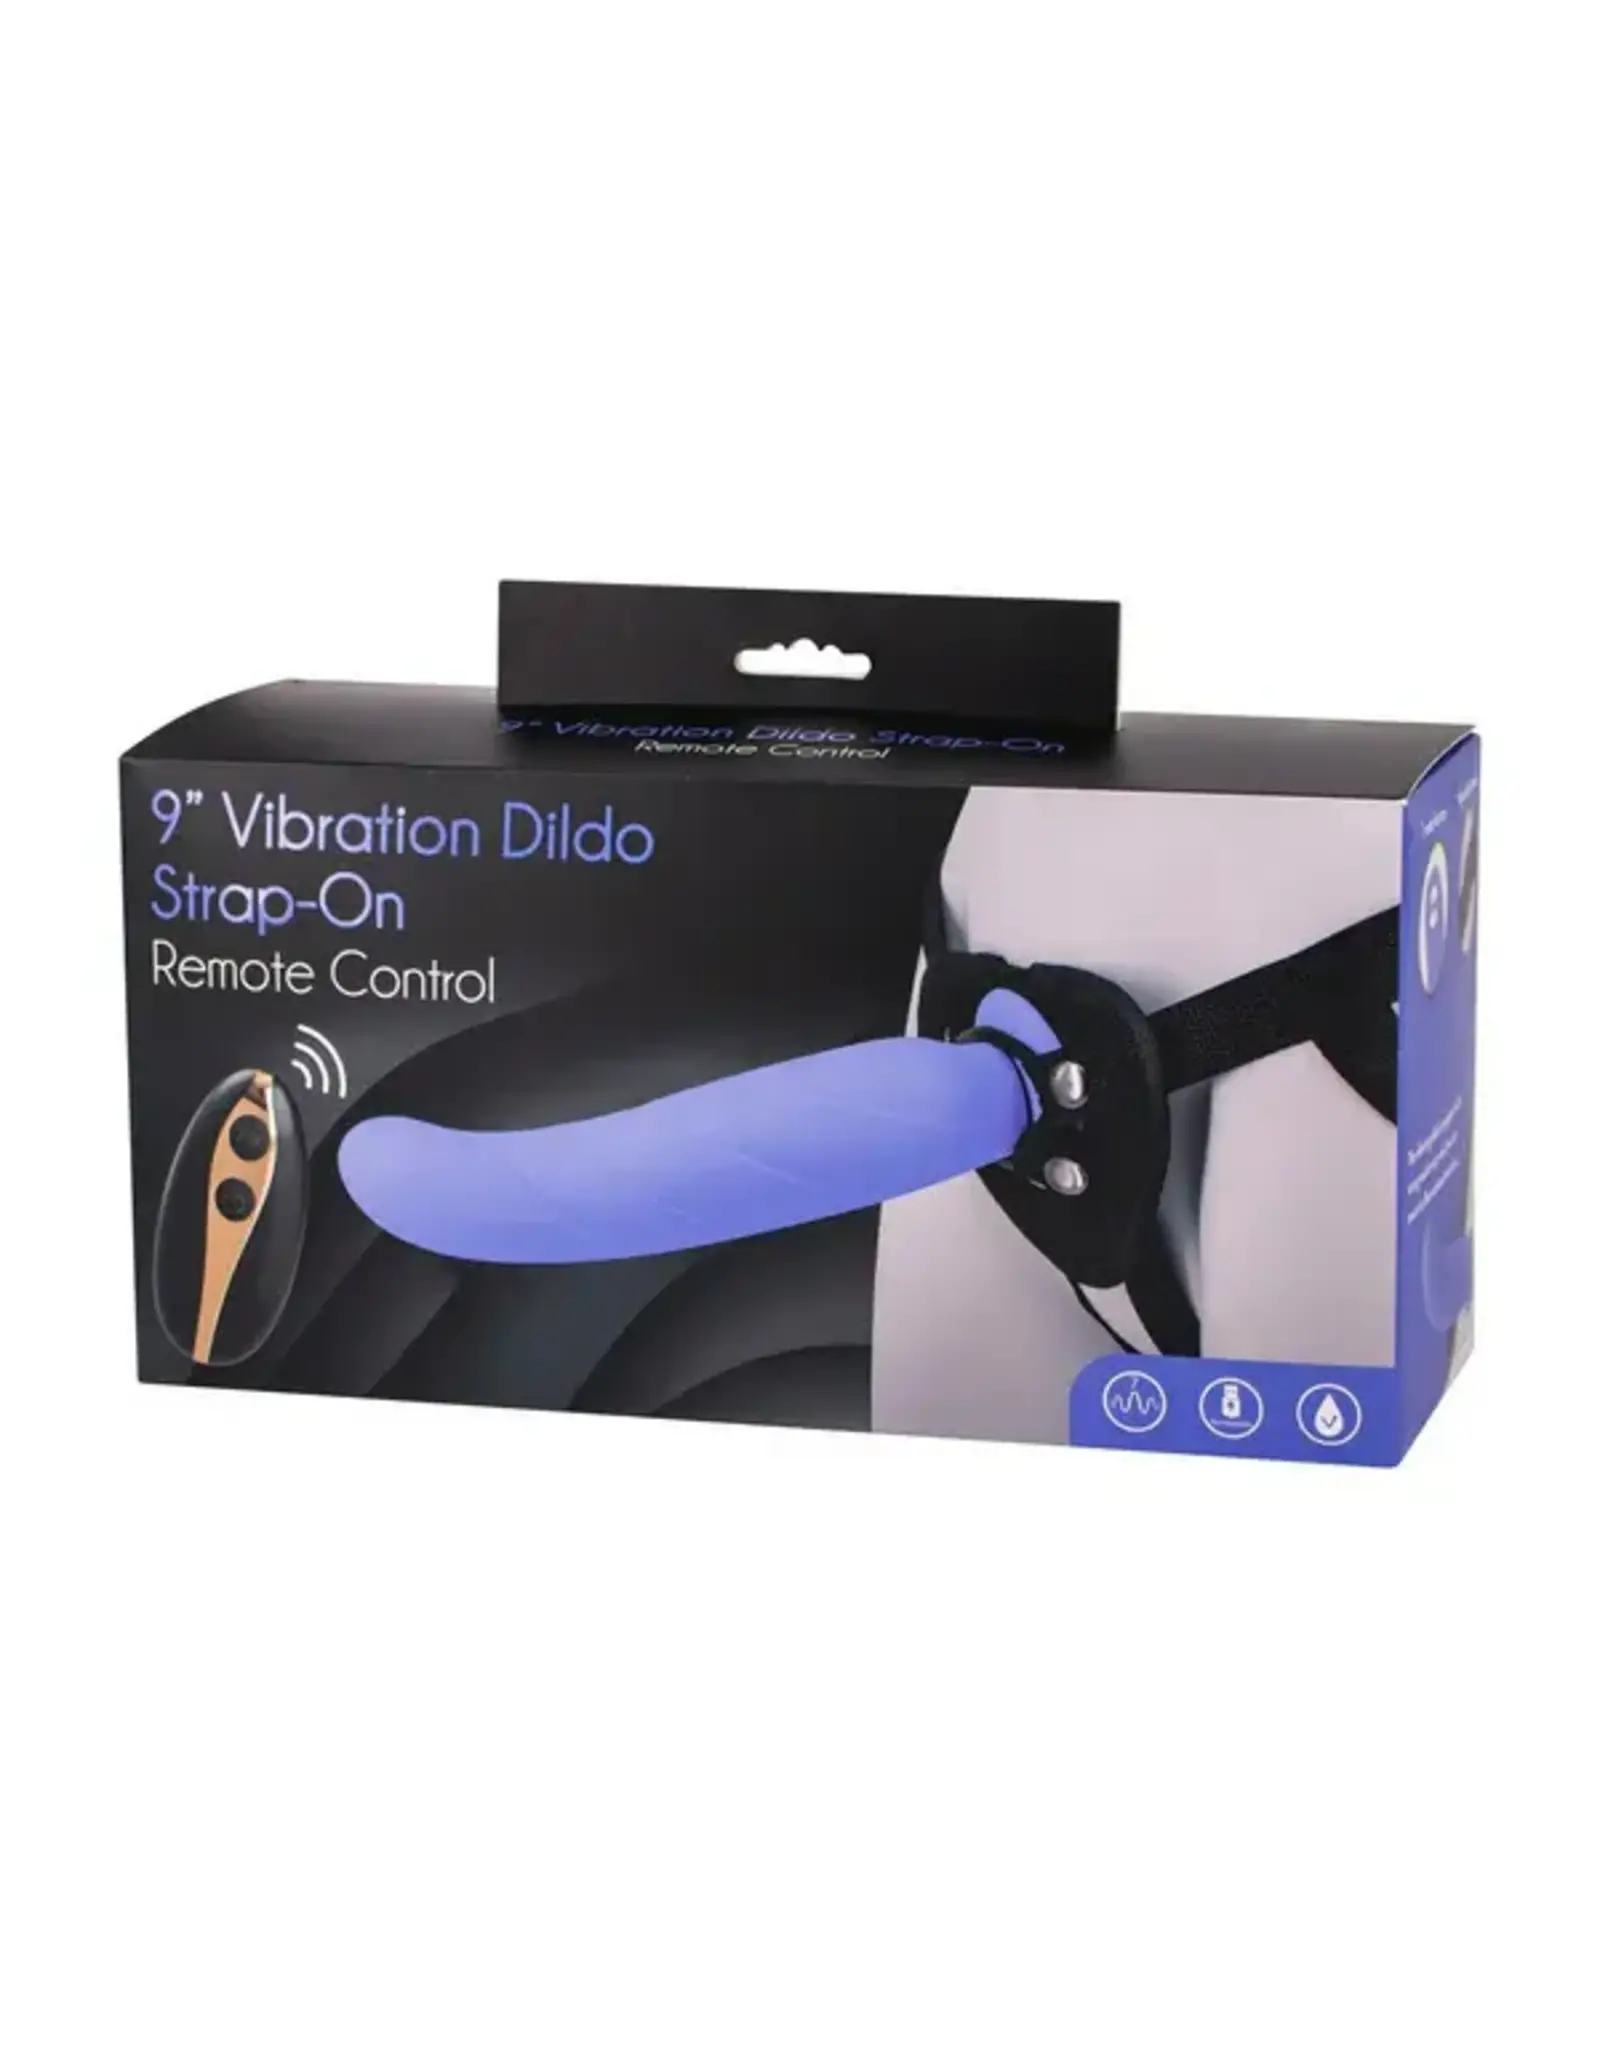 9" Vibration Dildo Strap-On with Remote Control - Blue